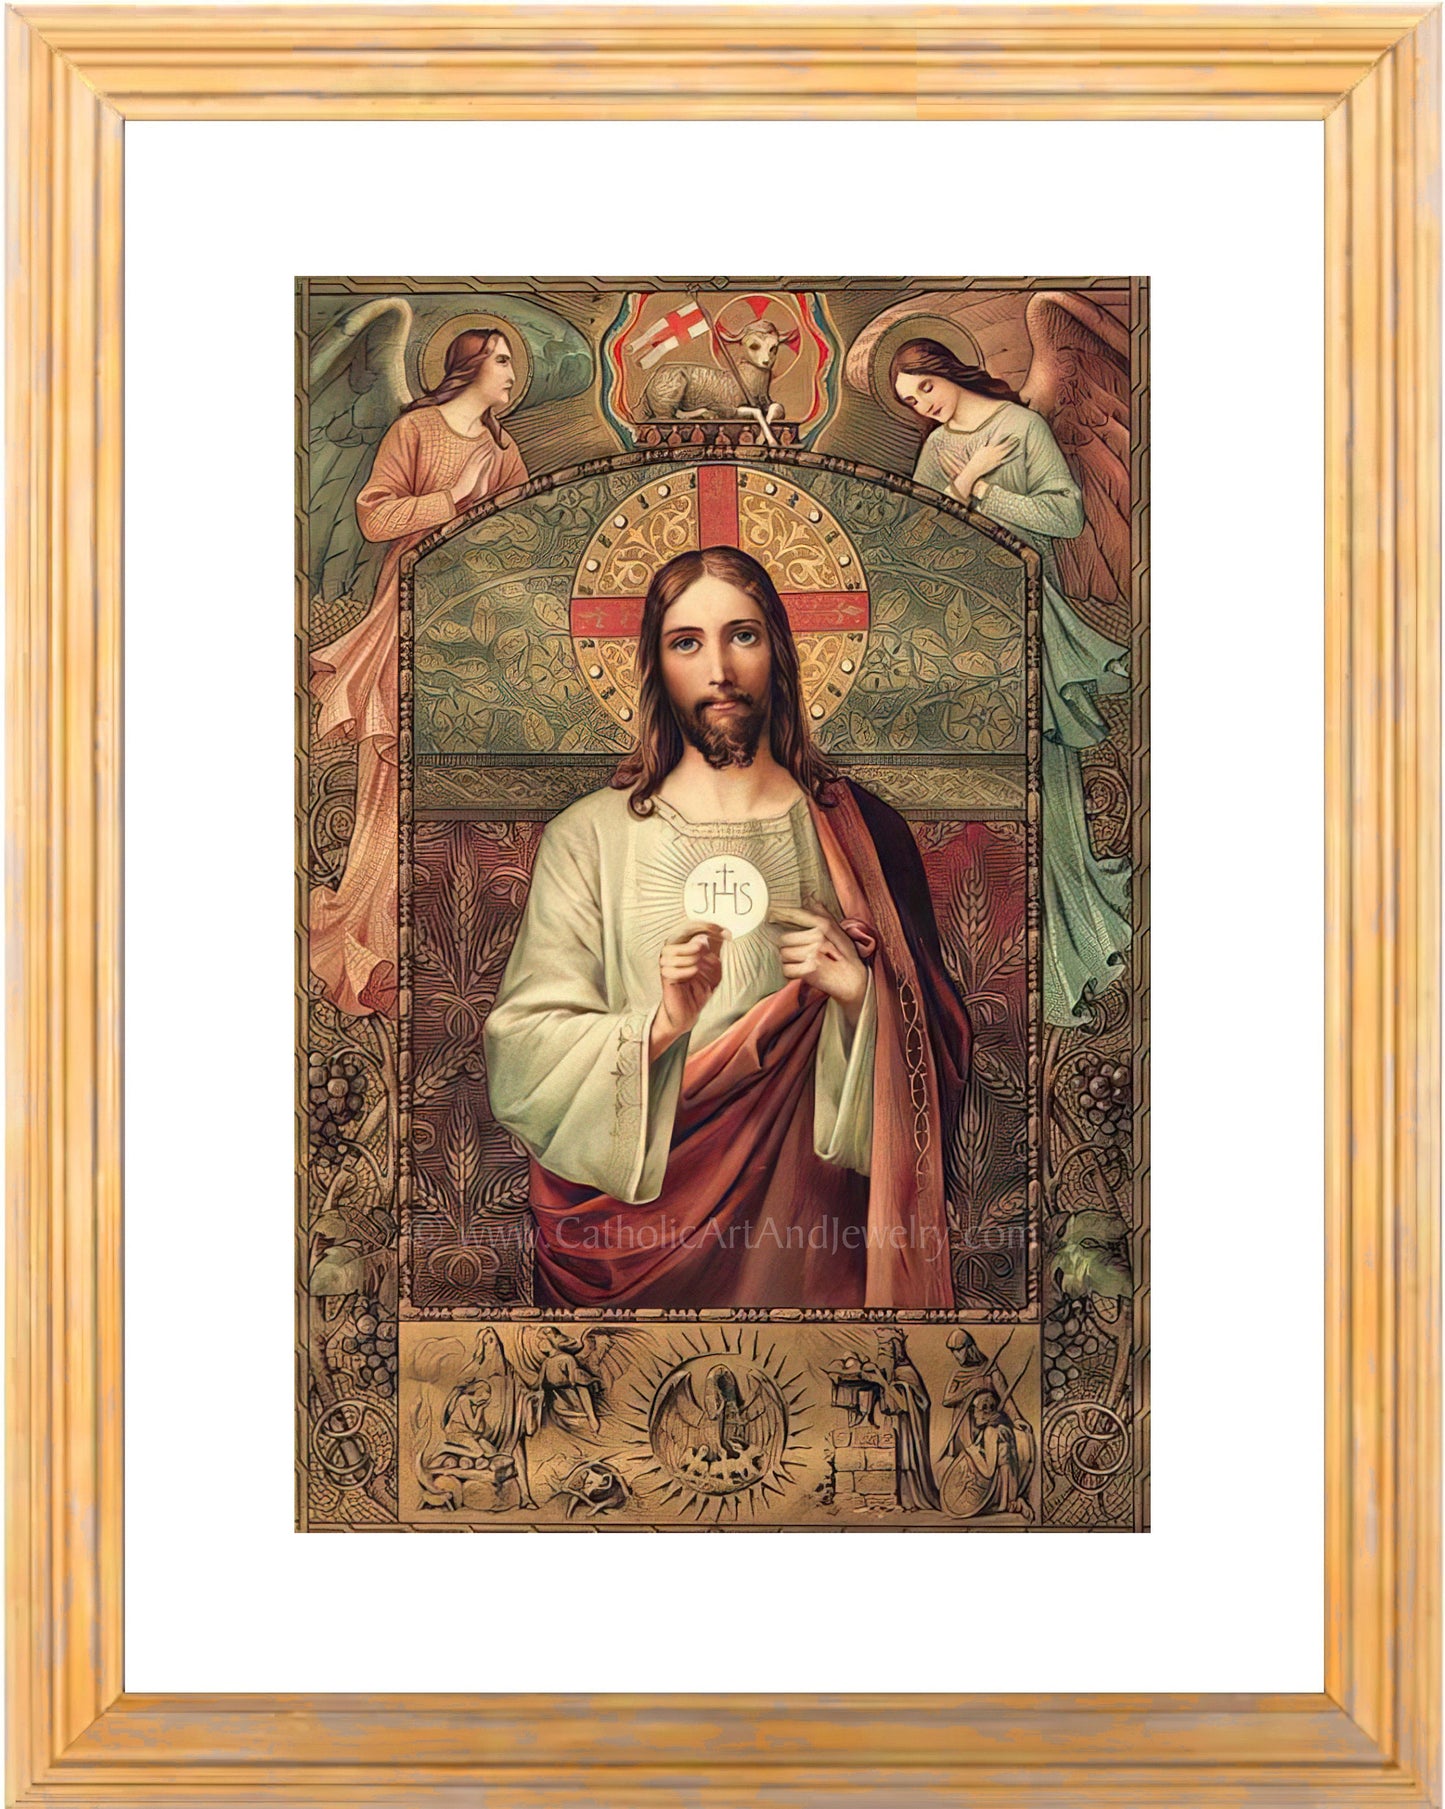 Jesus Holding the Eucharist / First Communion Gift / Vintage Catholic Art Print – Archival Quality